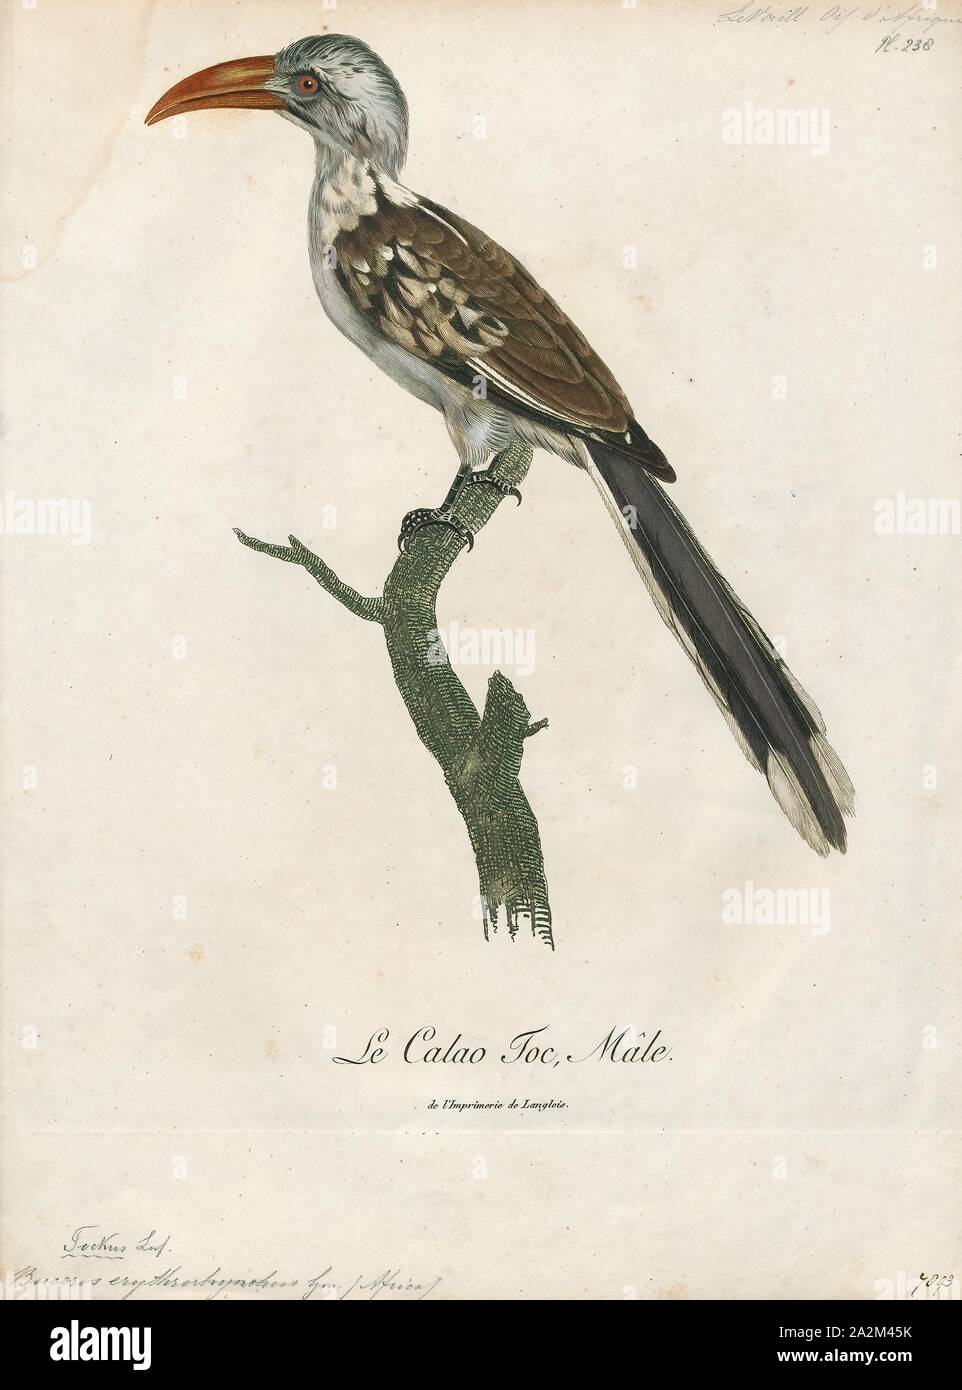 Buceros erythrorhynchus, Print, Buceros is a genus of large Asian hornbills (family Bucerotidae)., 1796-1808 Stock Photo